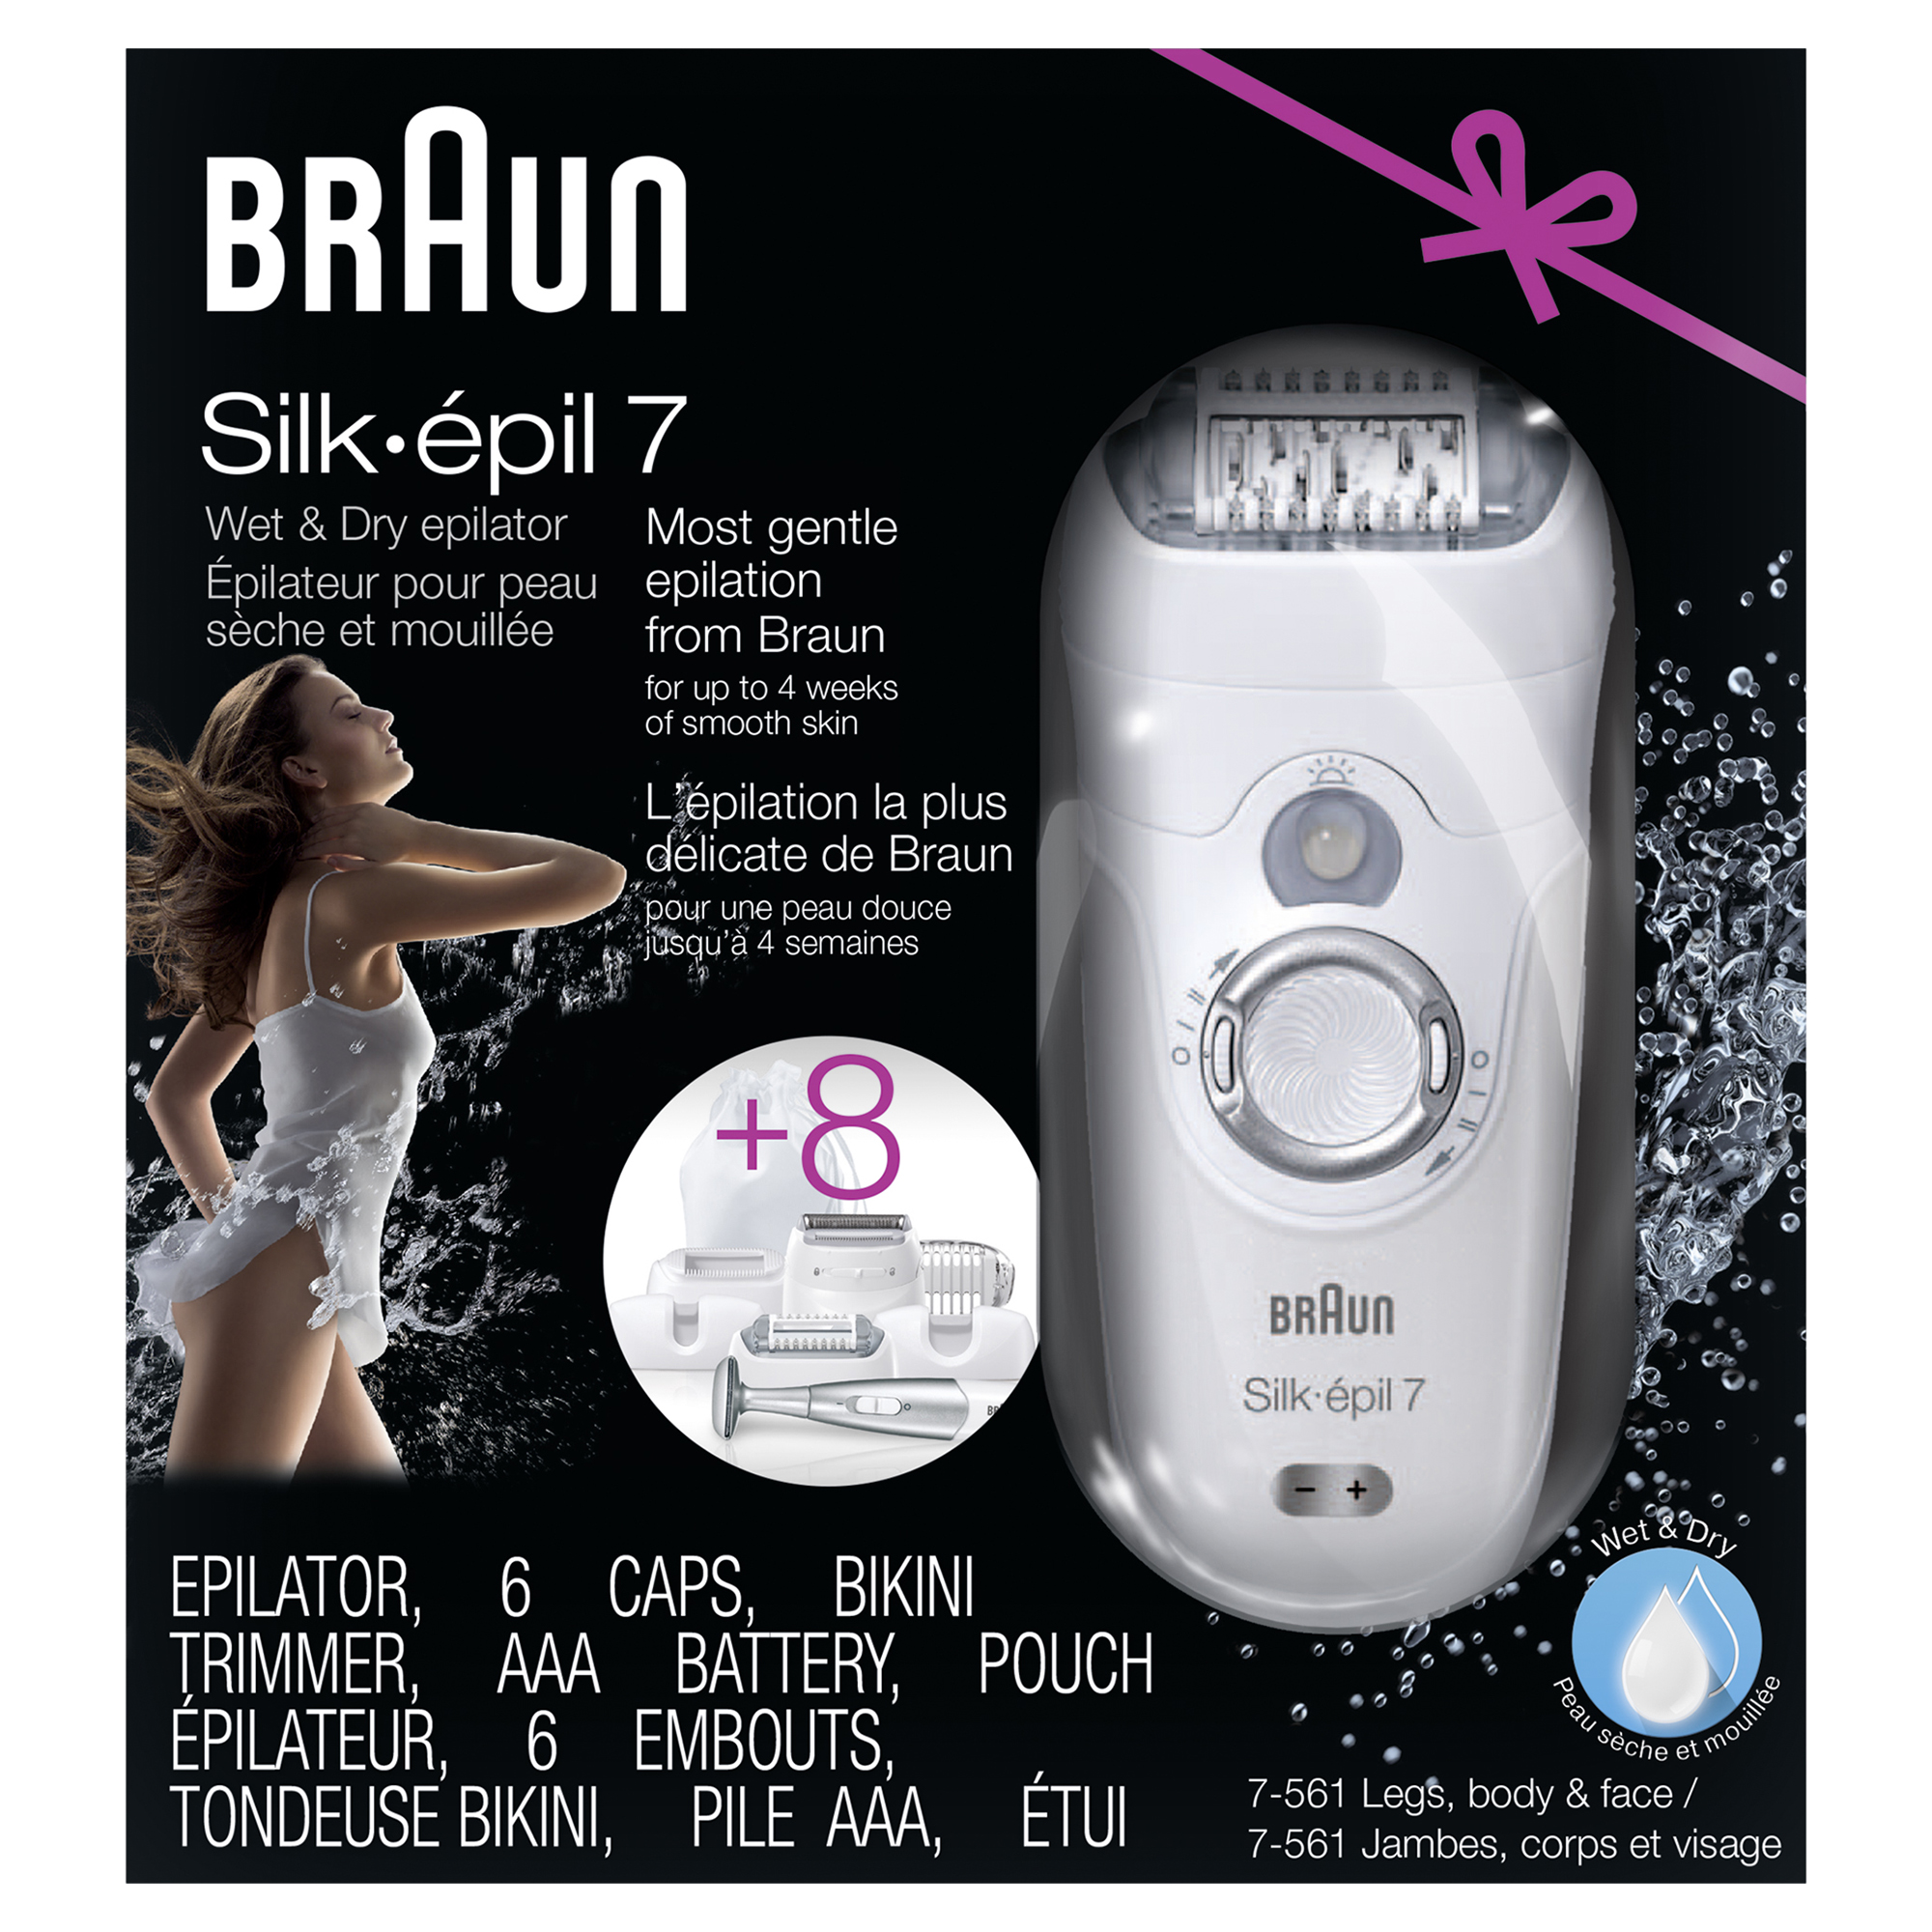 Braun Epilator Silk-epil 7 Wet Dry Gift Pack, 6 Caps, Bikini Trimmer - image 1 of 5